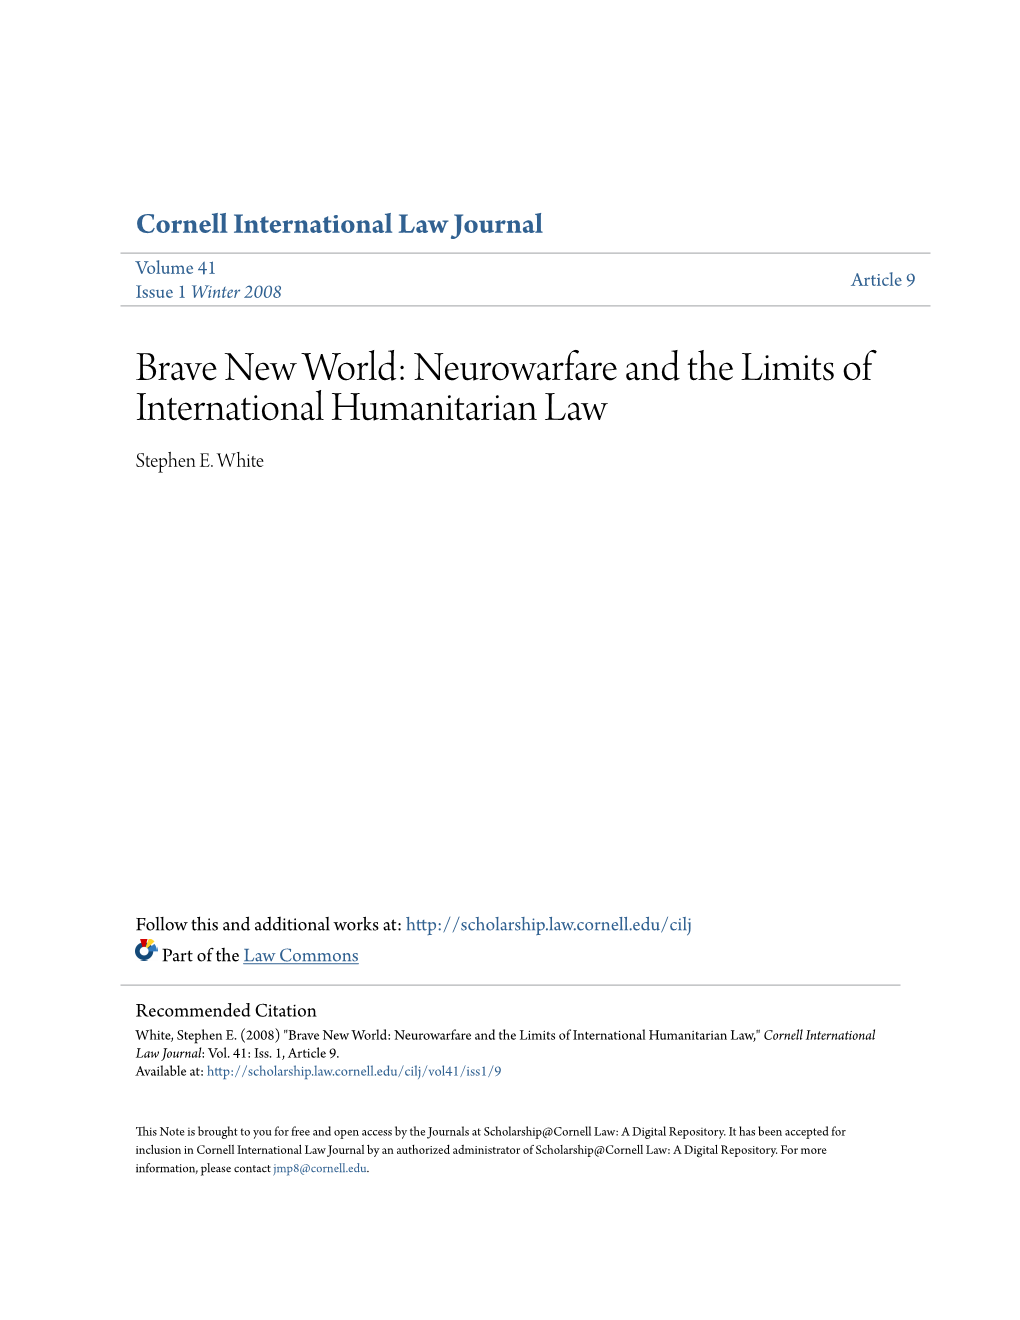 Neurowarfare and the Limits of International Humanitarian Law Stephen E